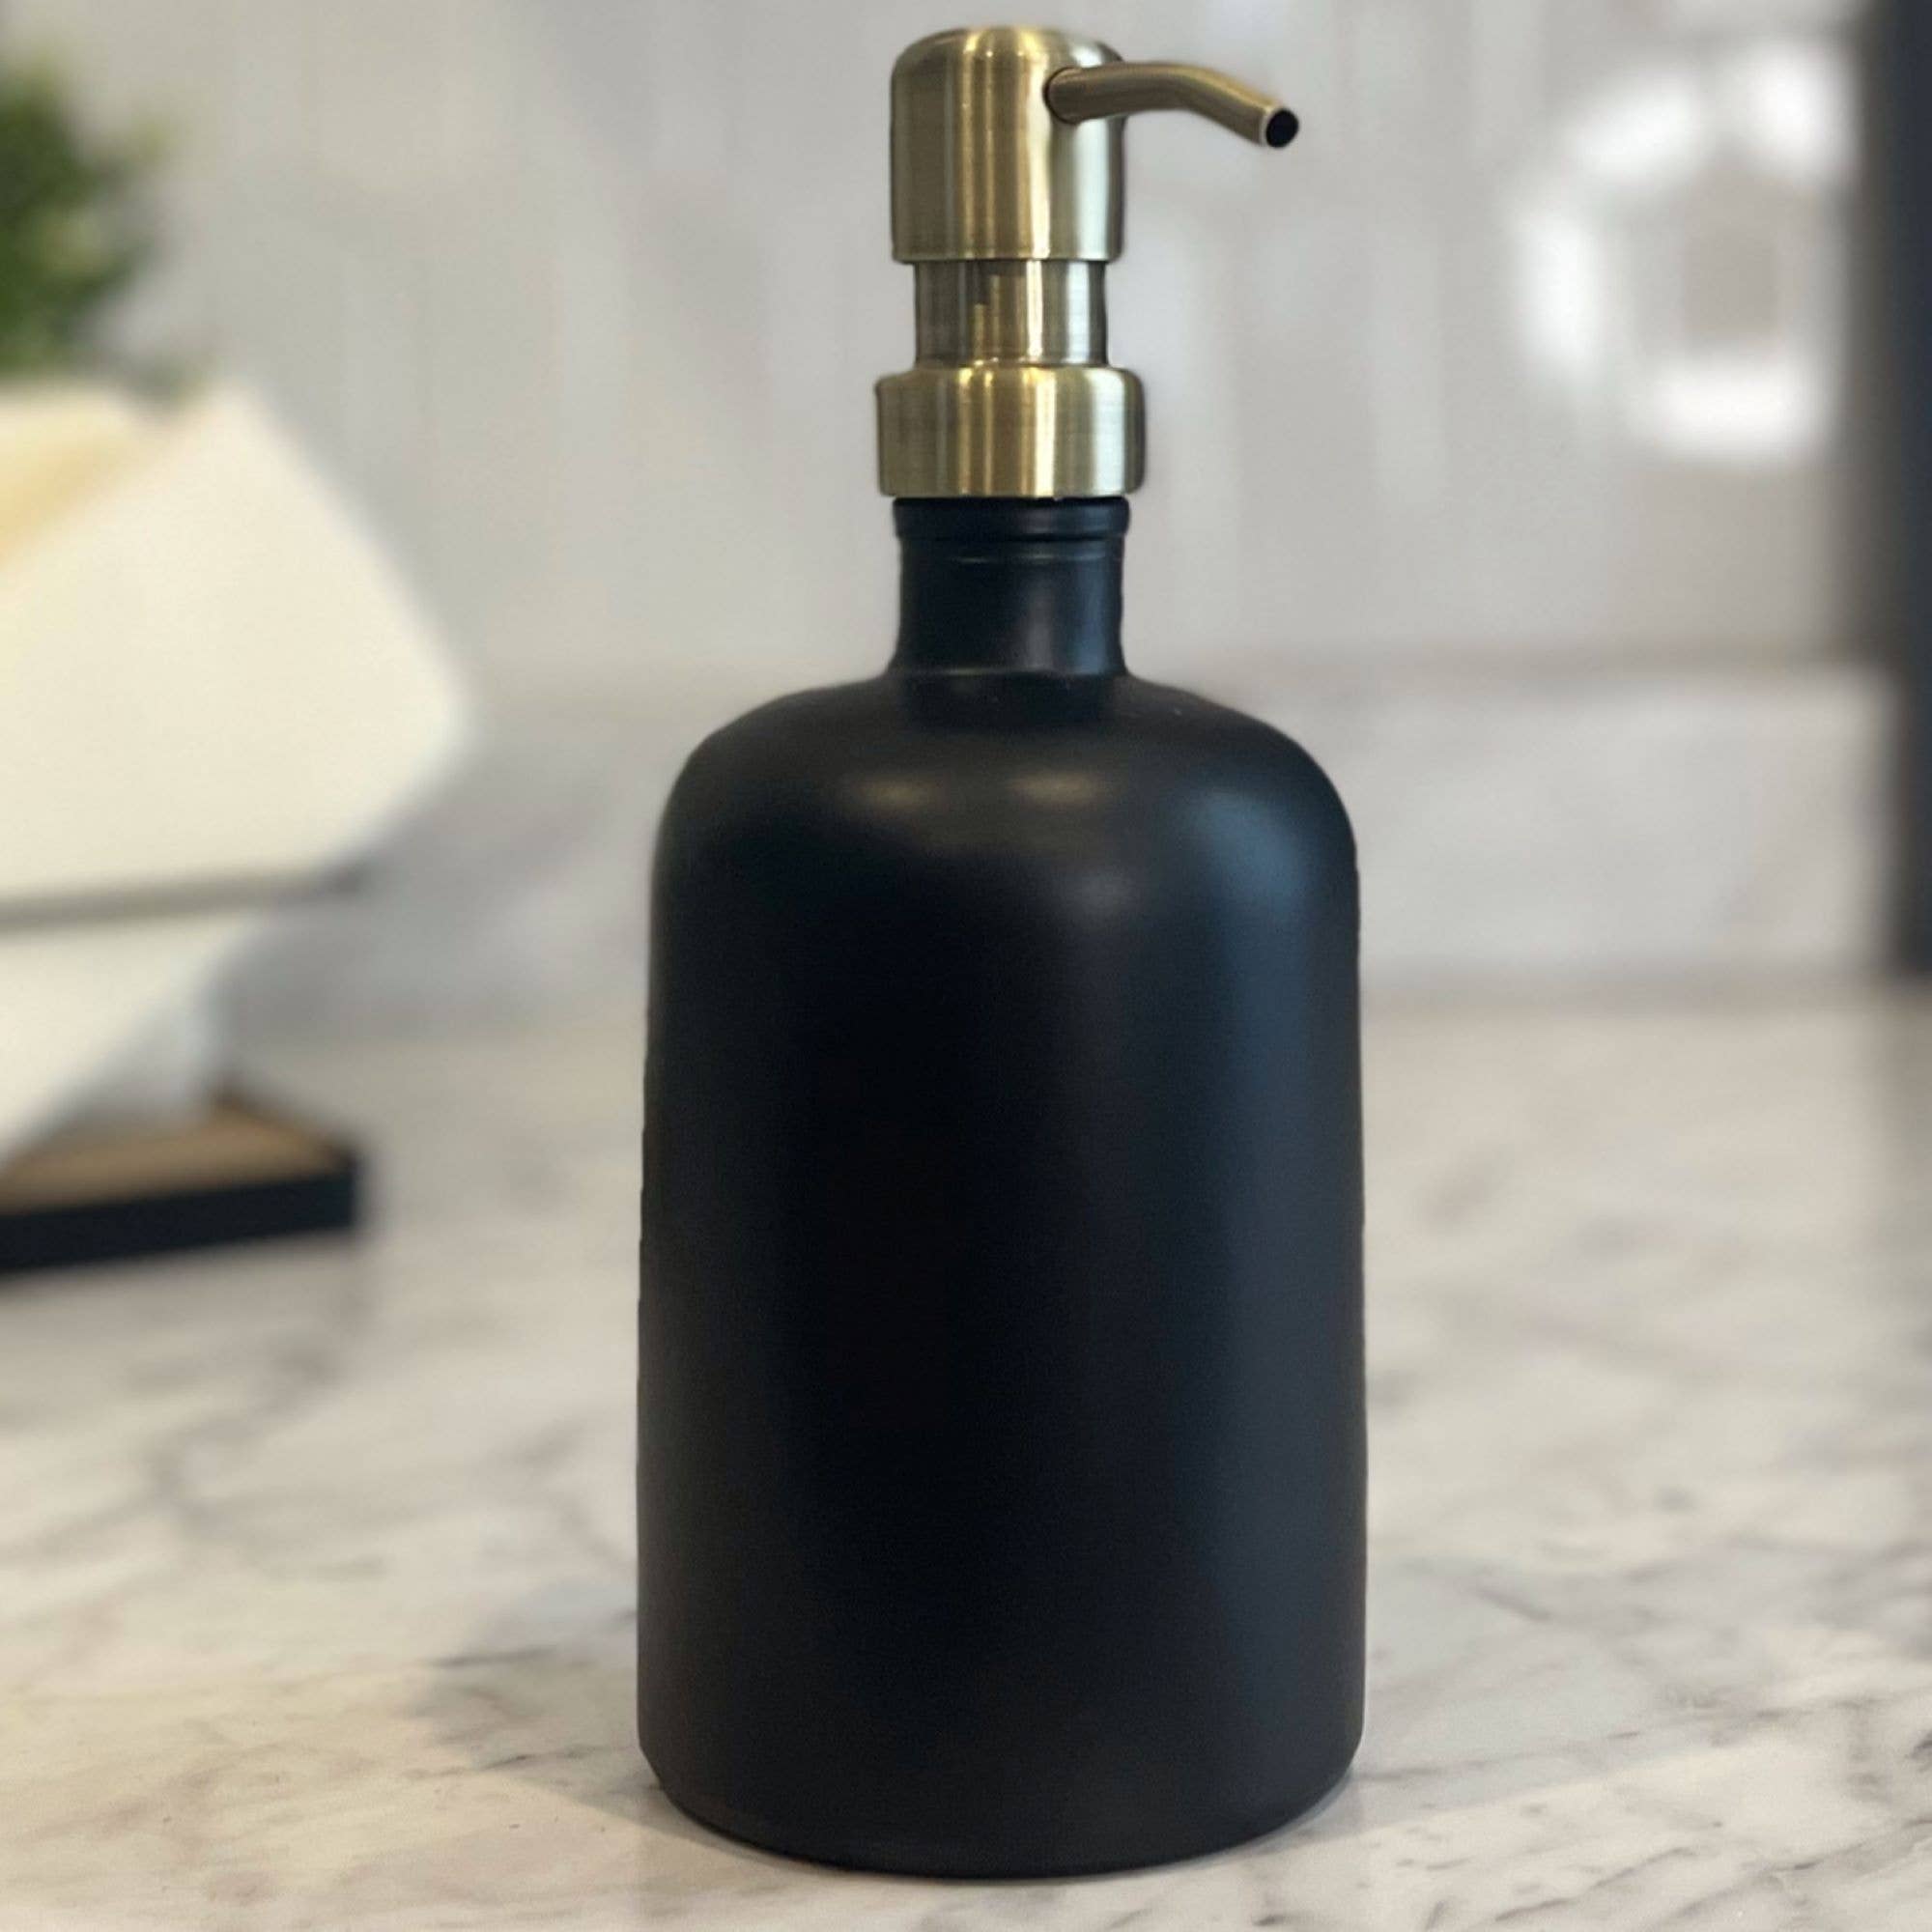 16oz Black Matte Glass Soap Dispenser bottle w/ metal pumps.